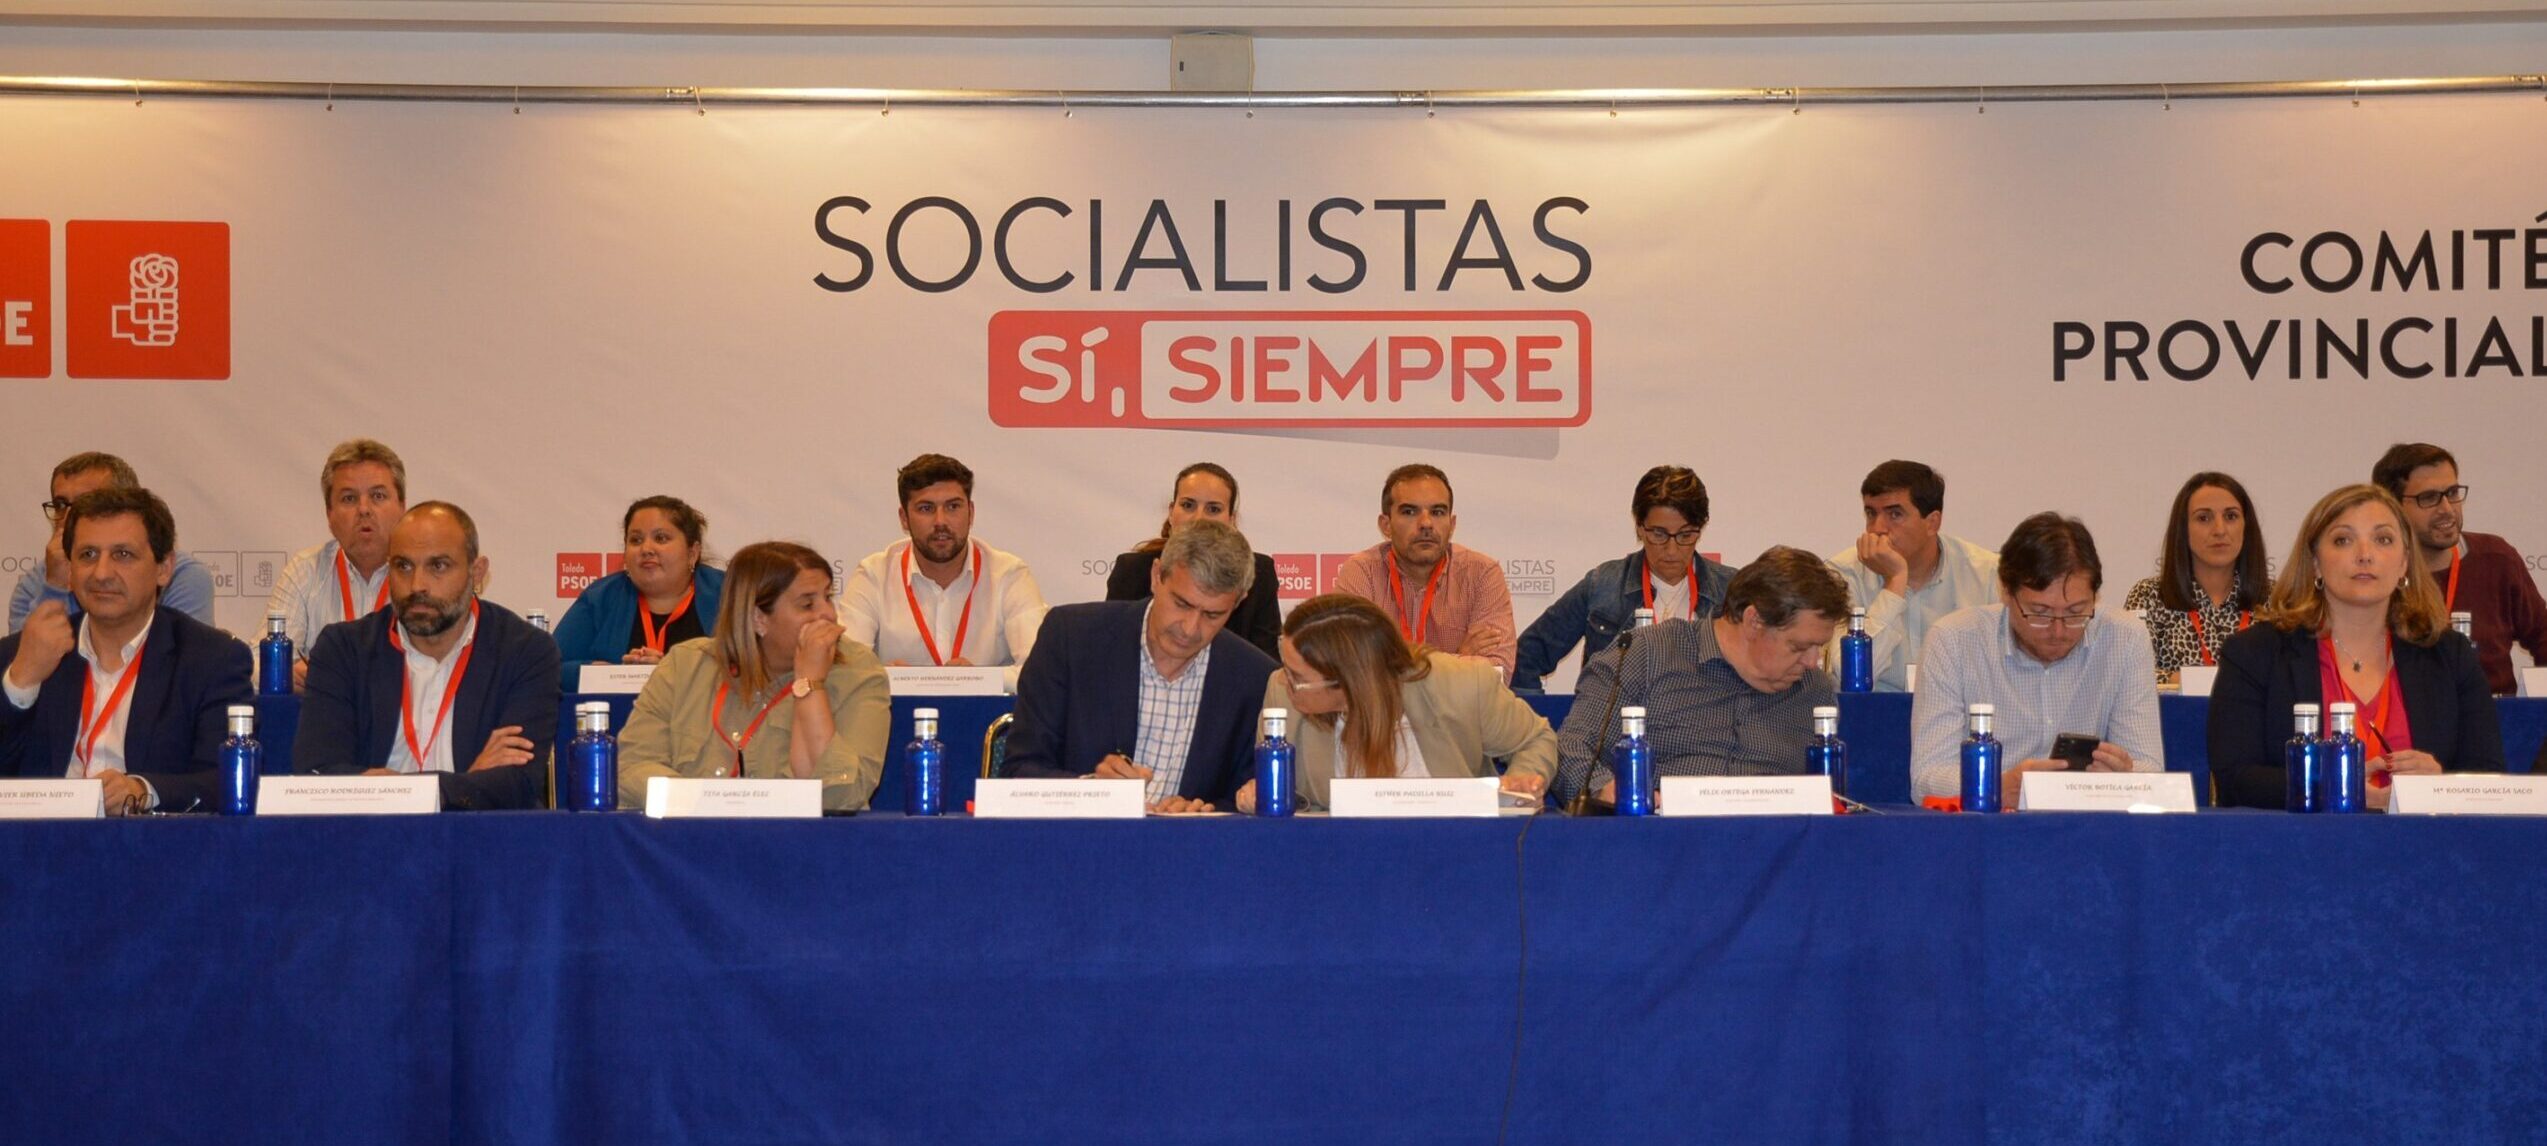 ComiteProvincial PSOE